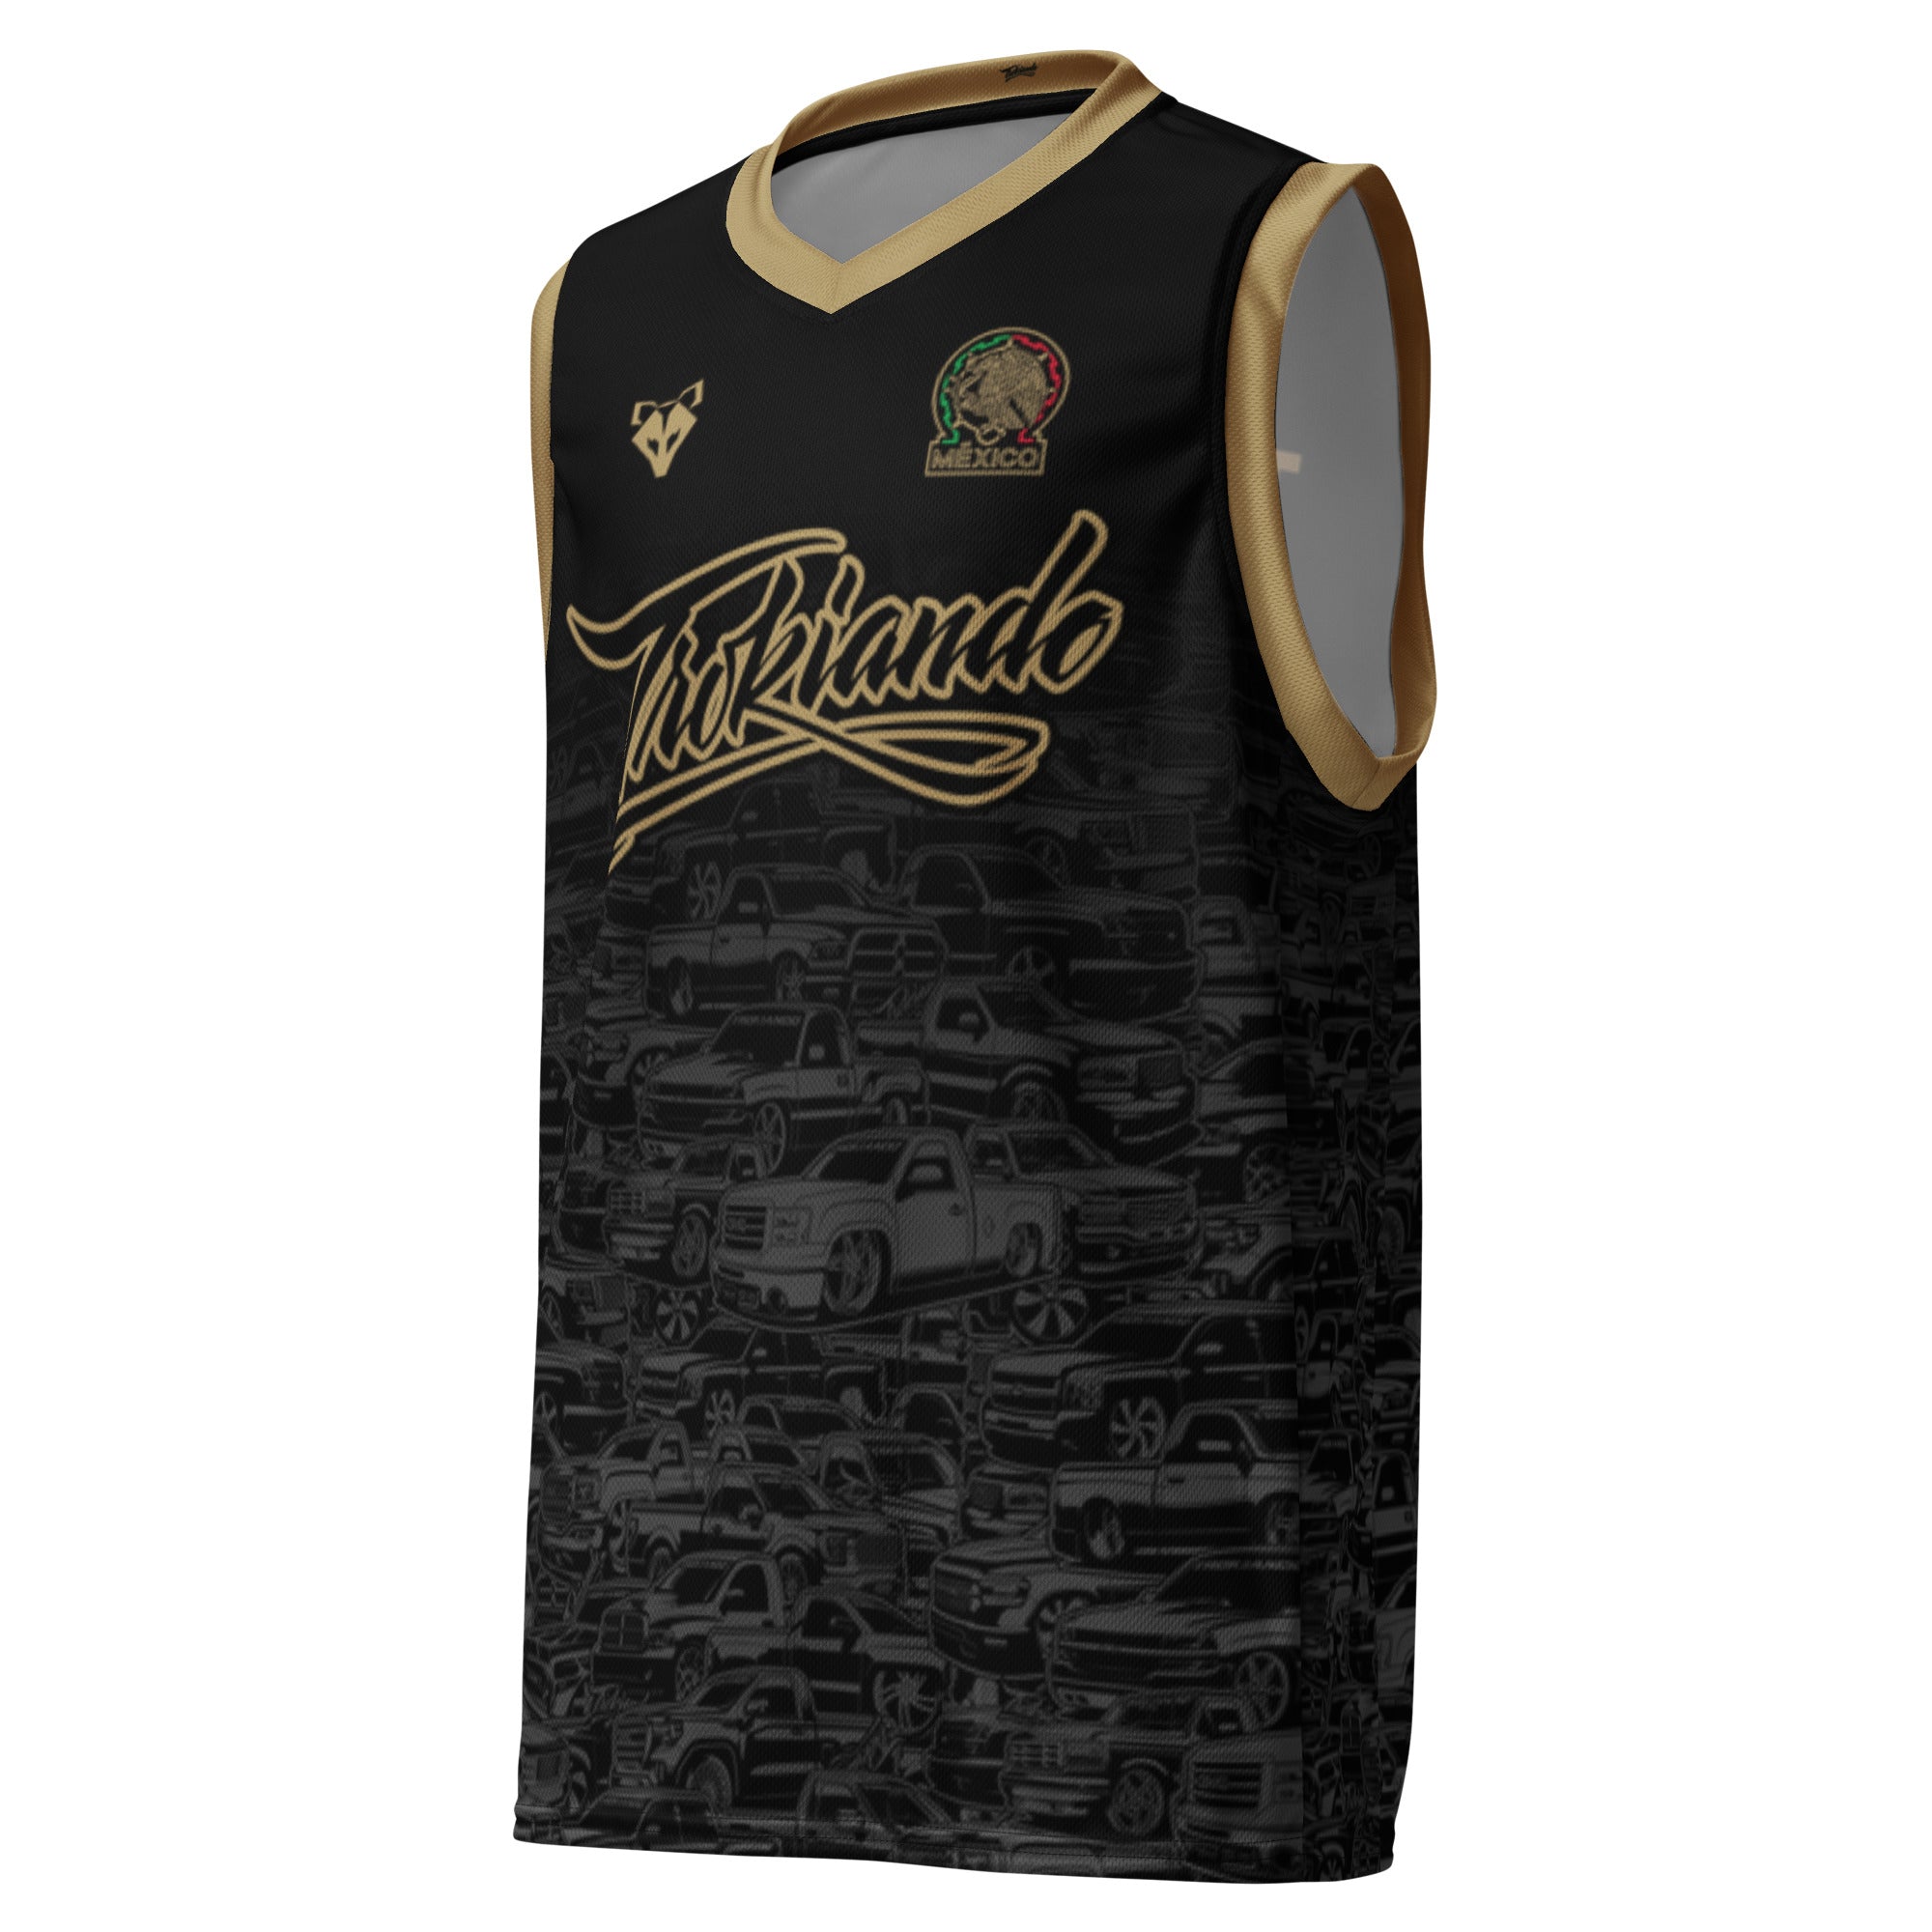 Trokiando Basketball Jersey (Gold) 2XS